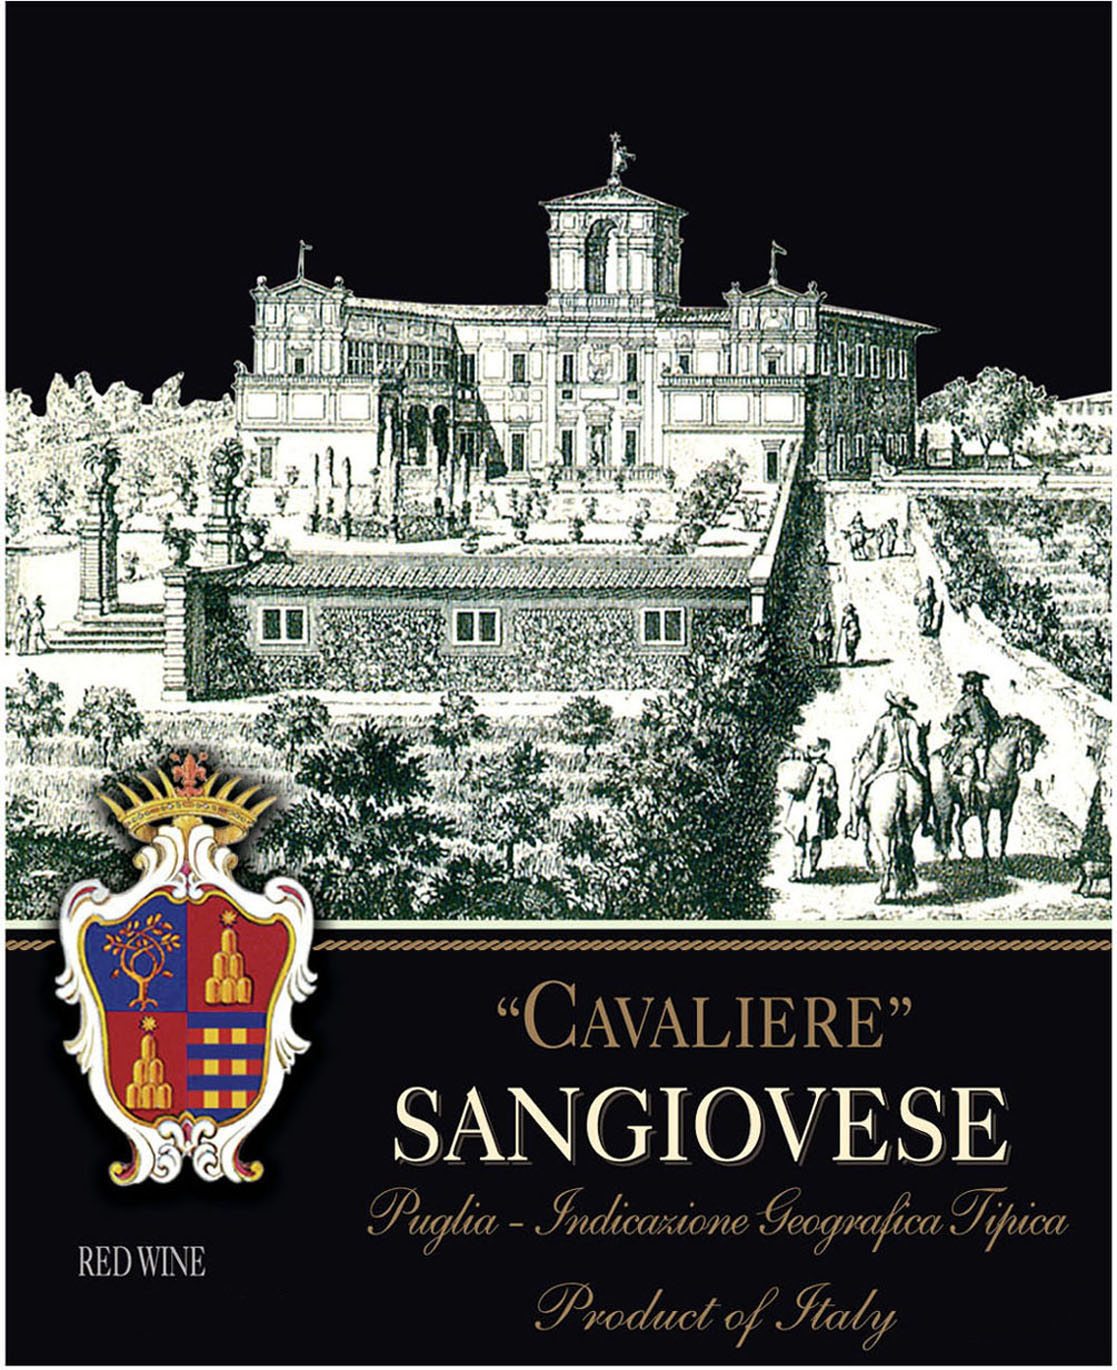 Cavaliere - Sangiovese label